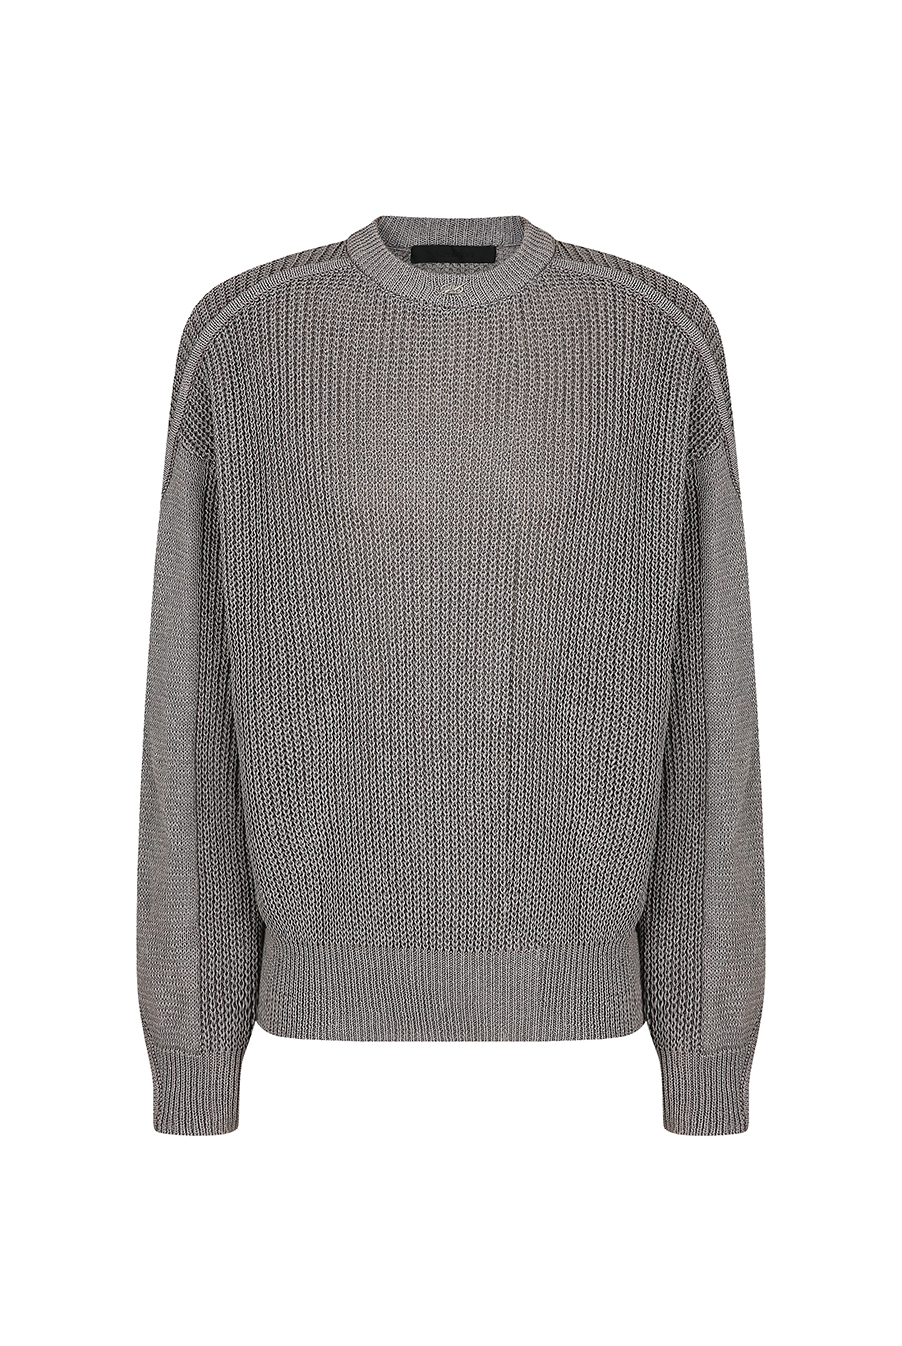 Lining logo knit - Steel Grey